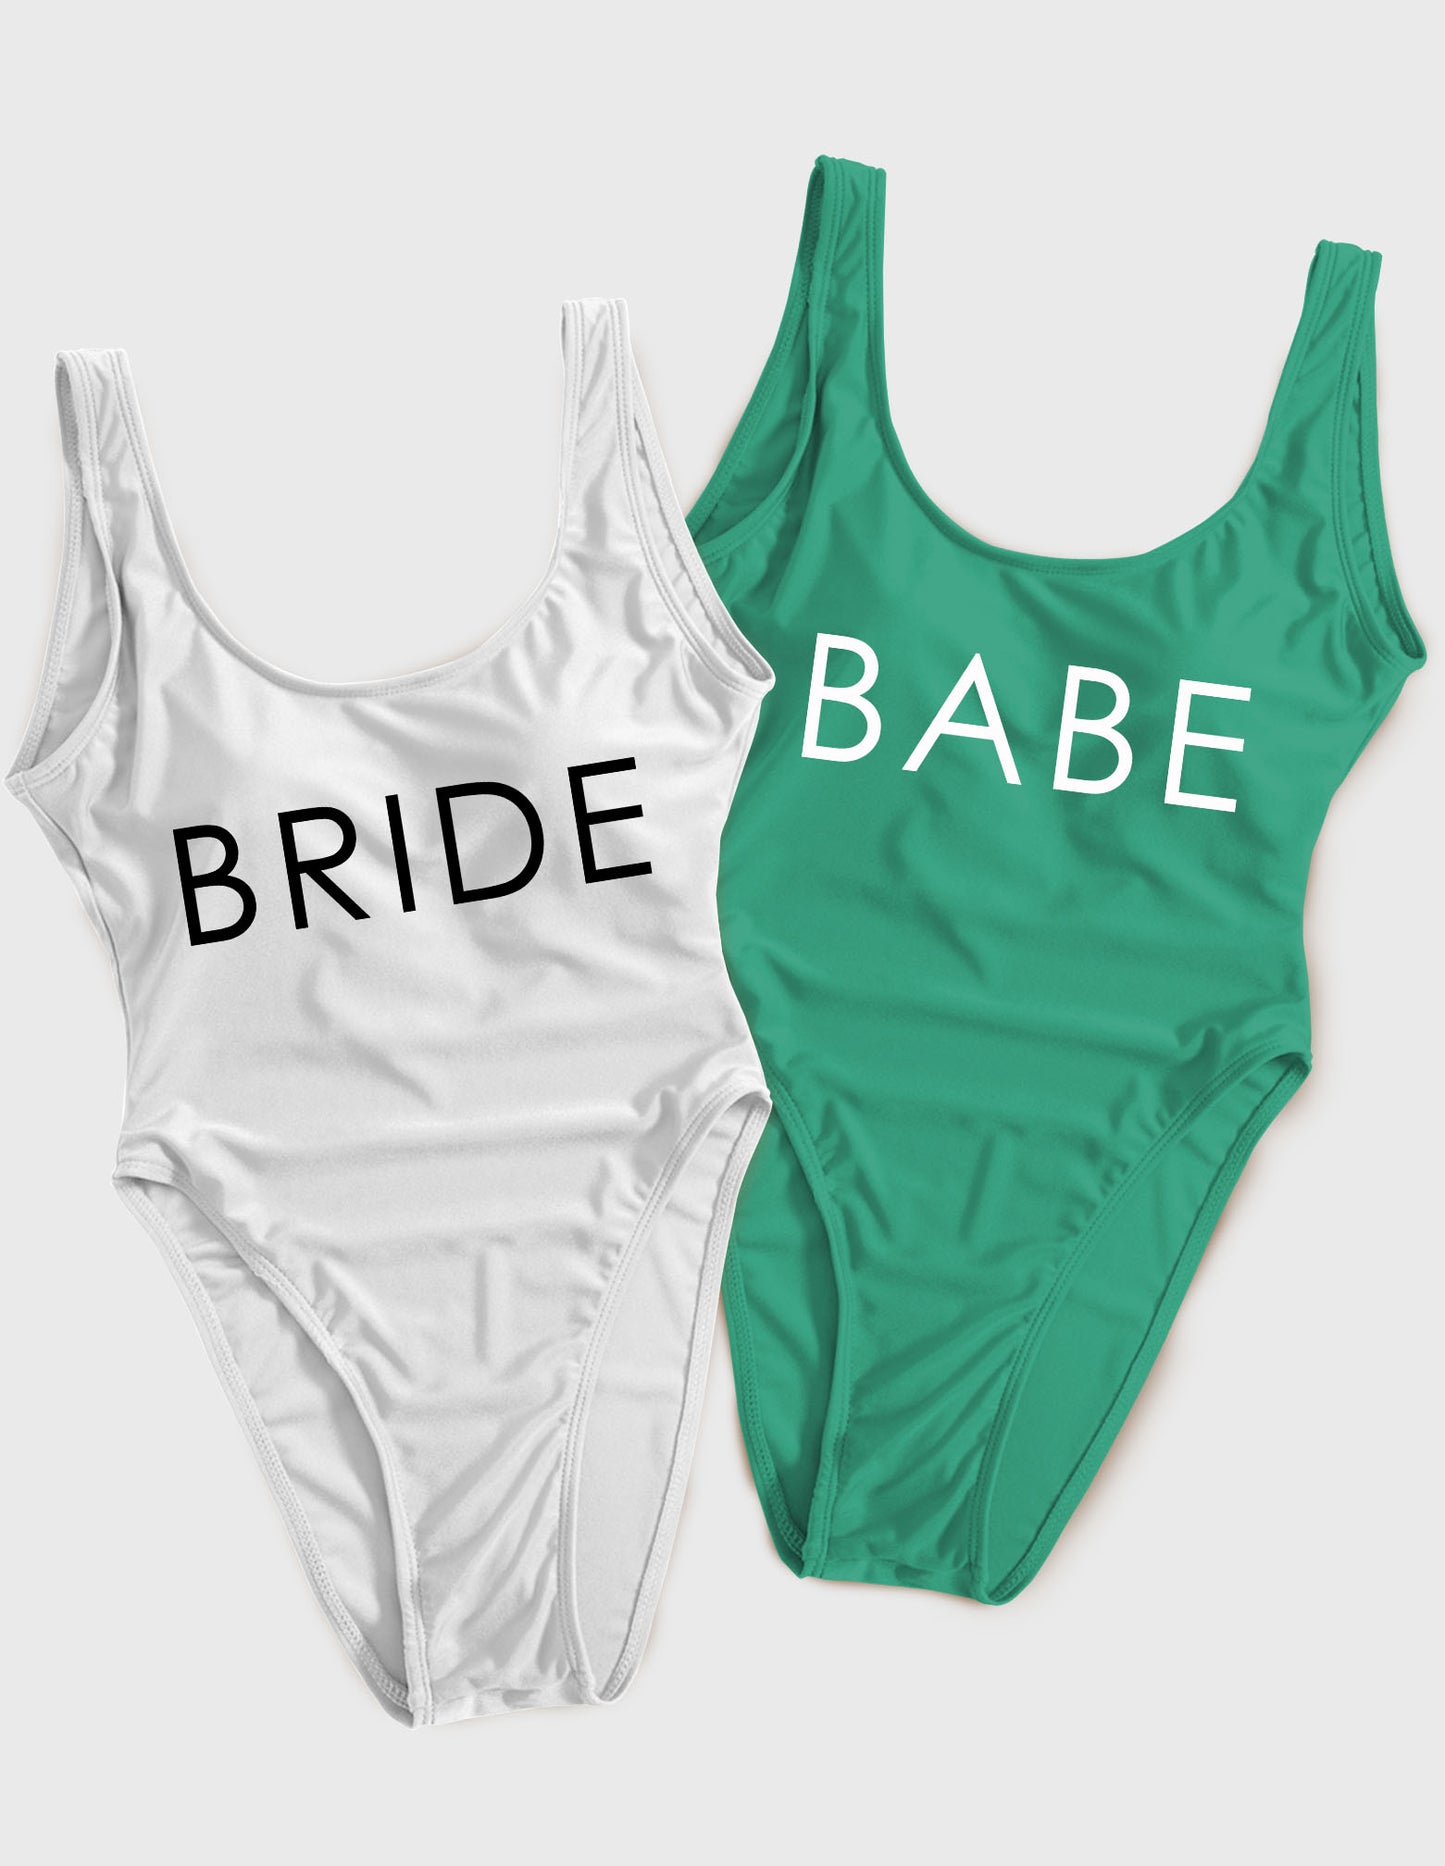 Bride & Babe Bride Swimsuit